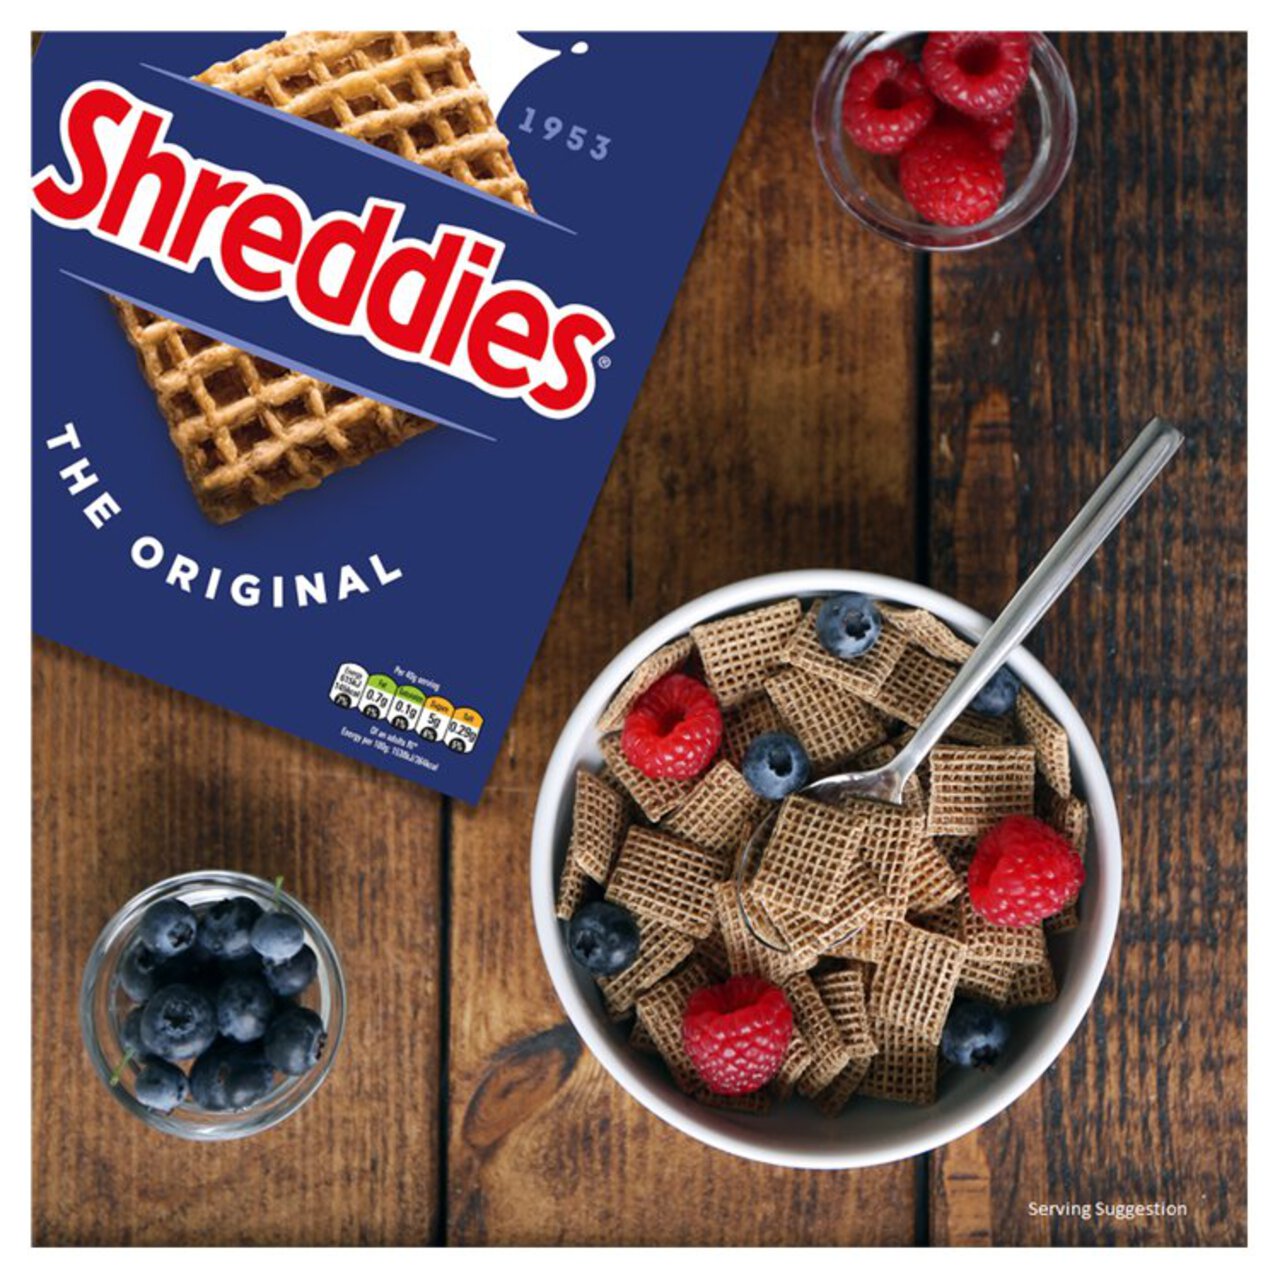 Nestle Shreddies The Original Cereal 460g